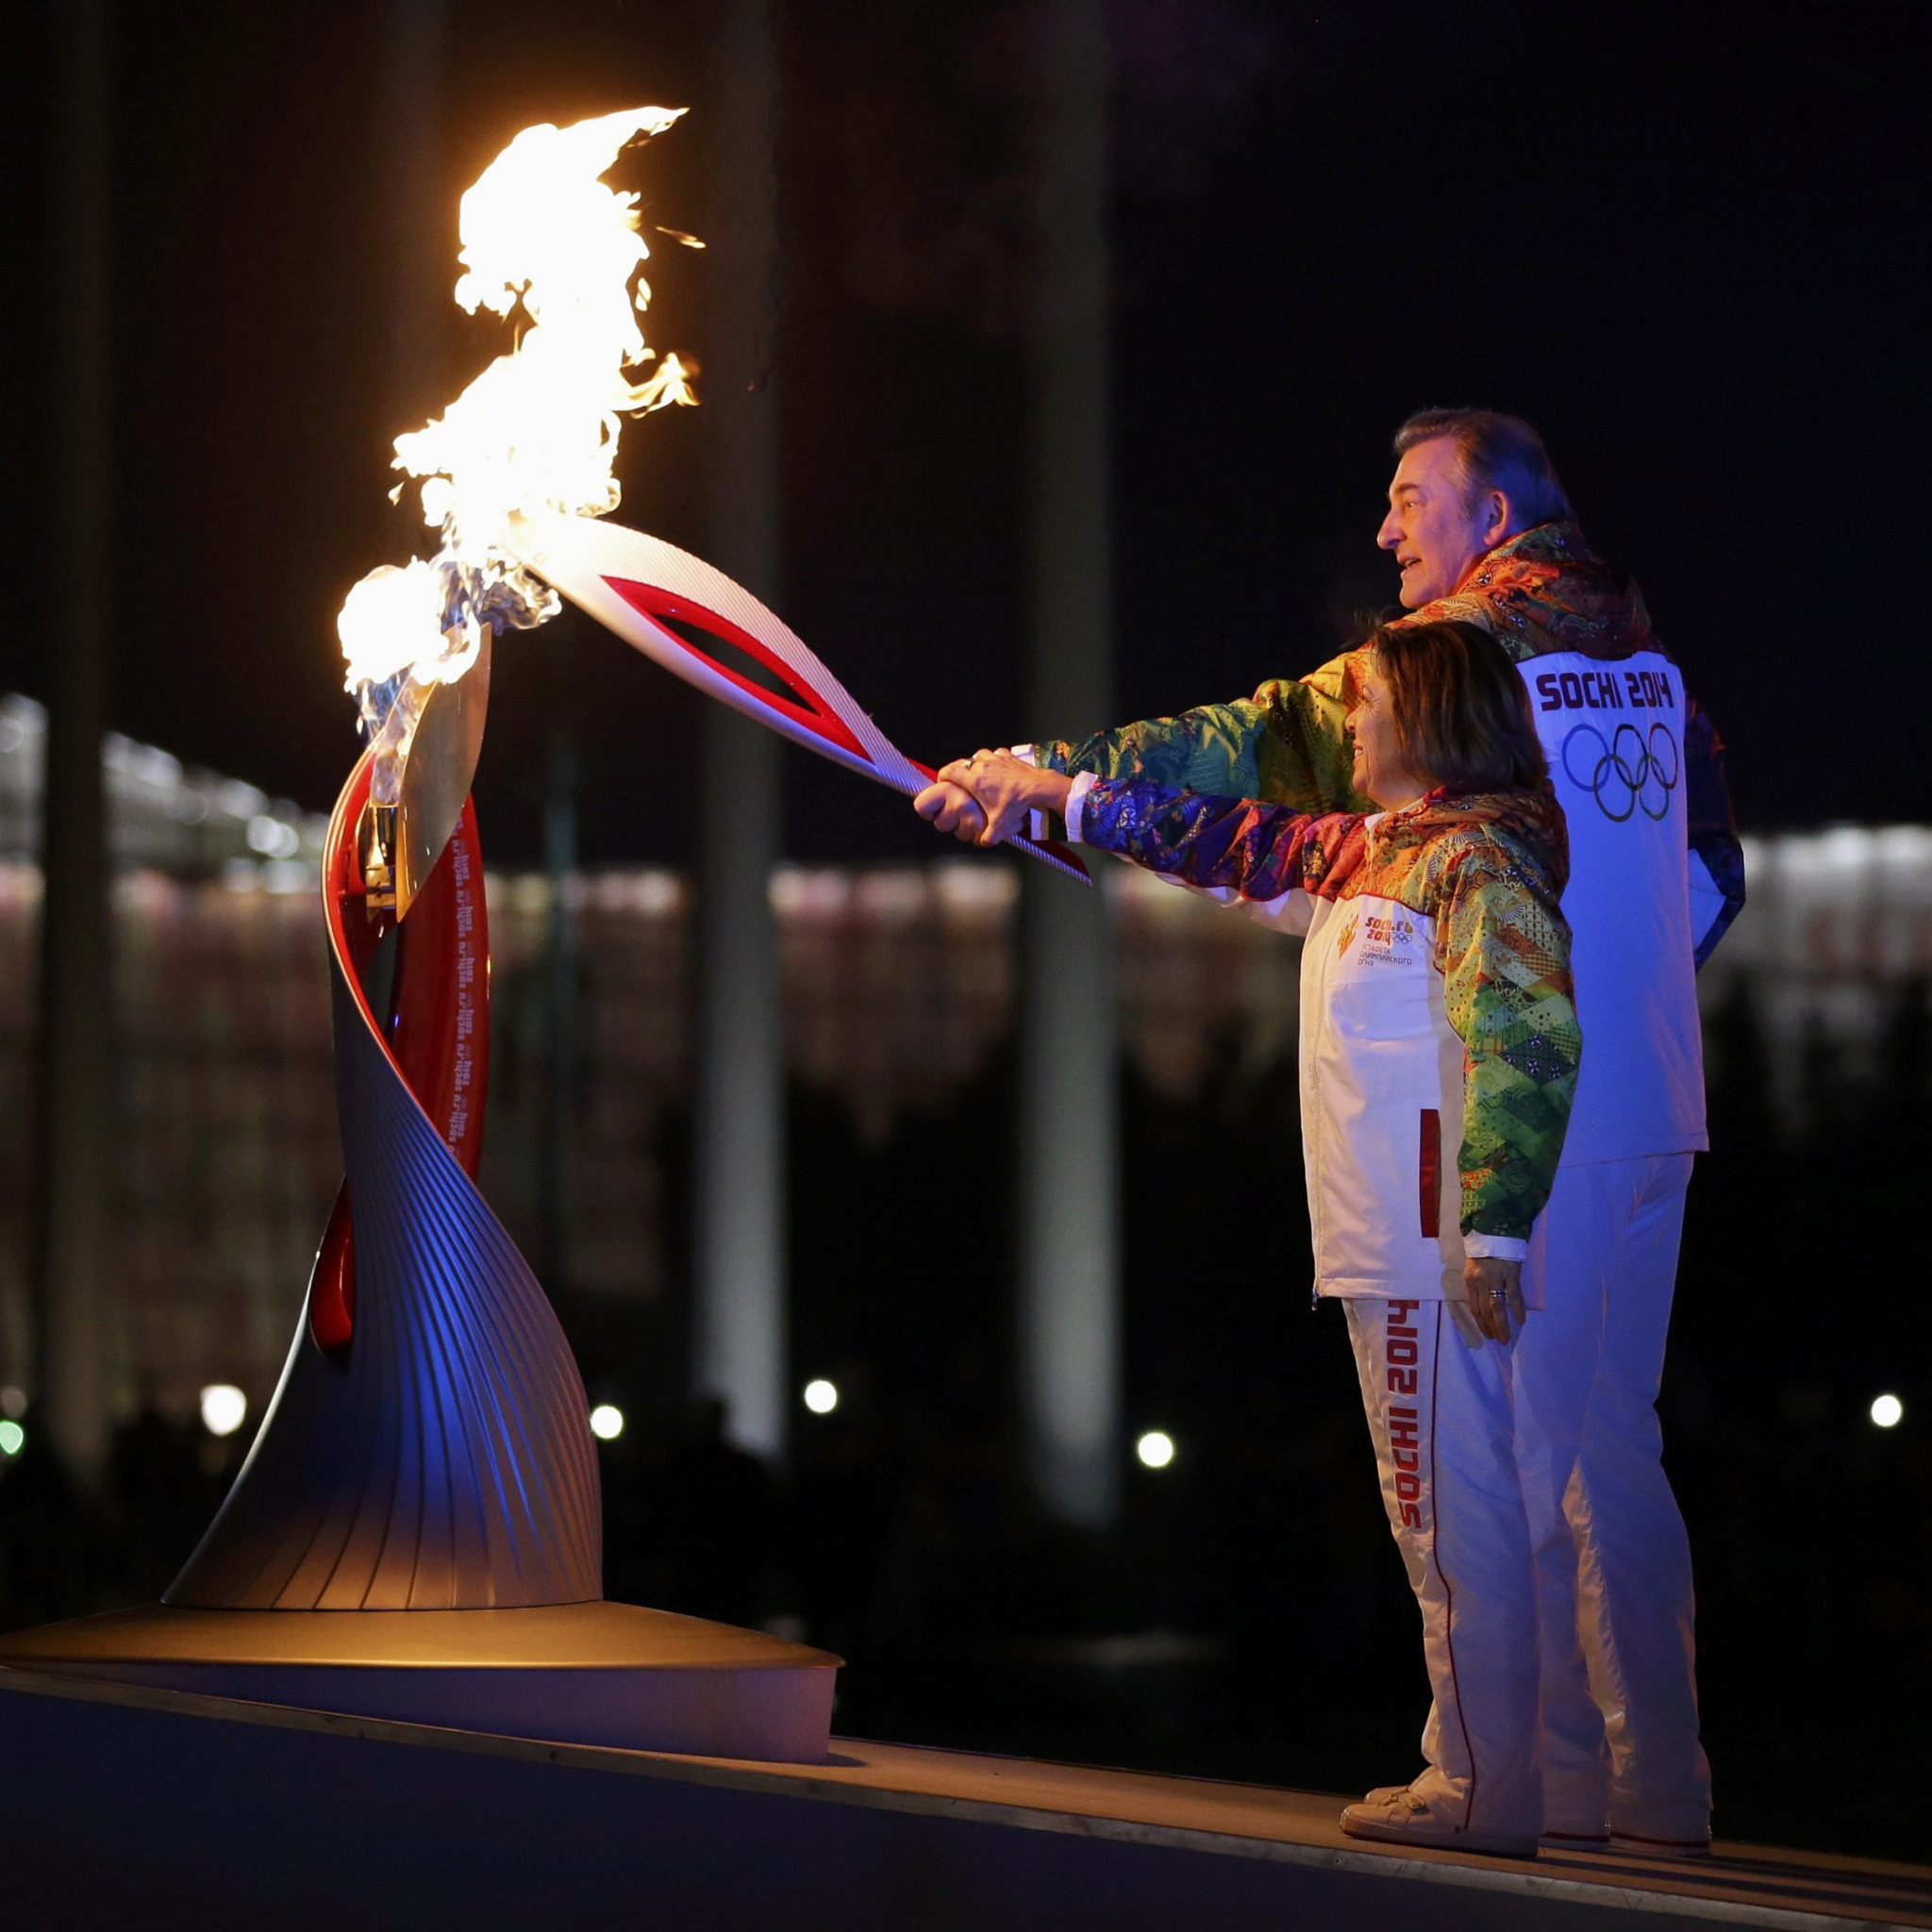 Факел начал игру. Олимпийский огонь Сочи 2014. Факел олимпийского огня Сочи 2014. Открытие Олимпийских игр в Сочи 2014.